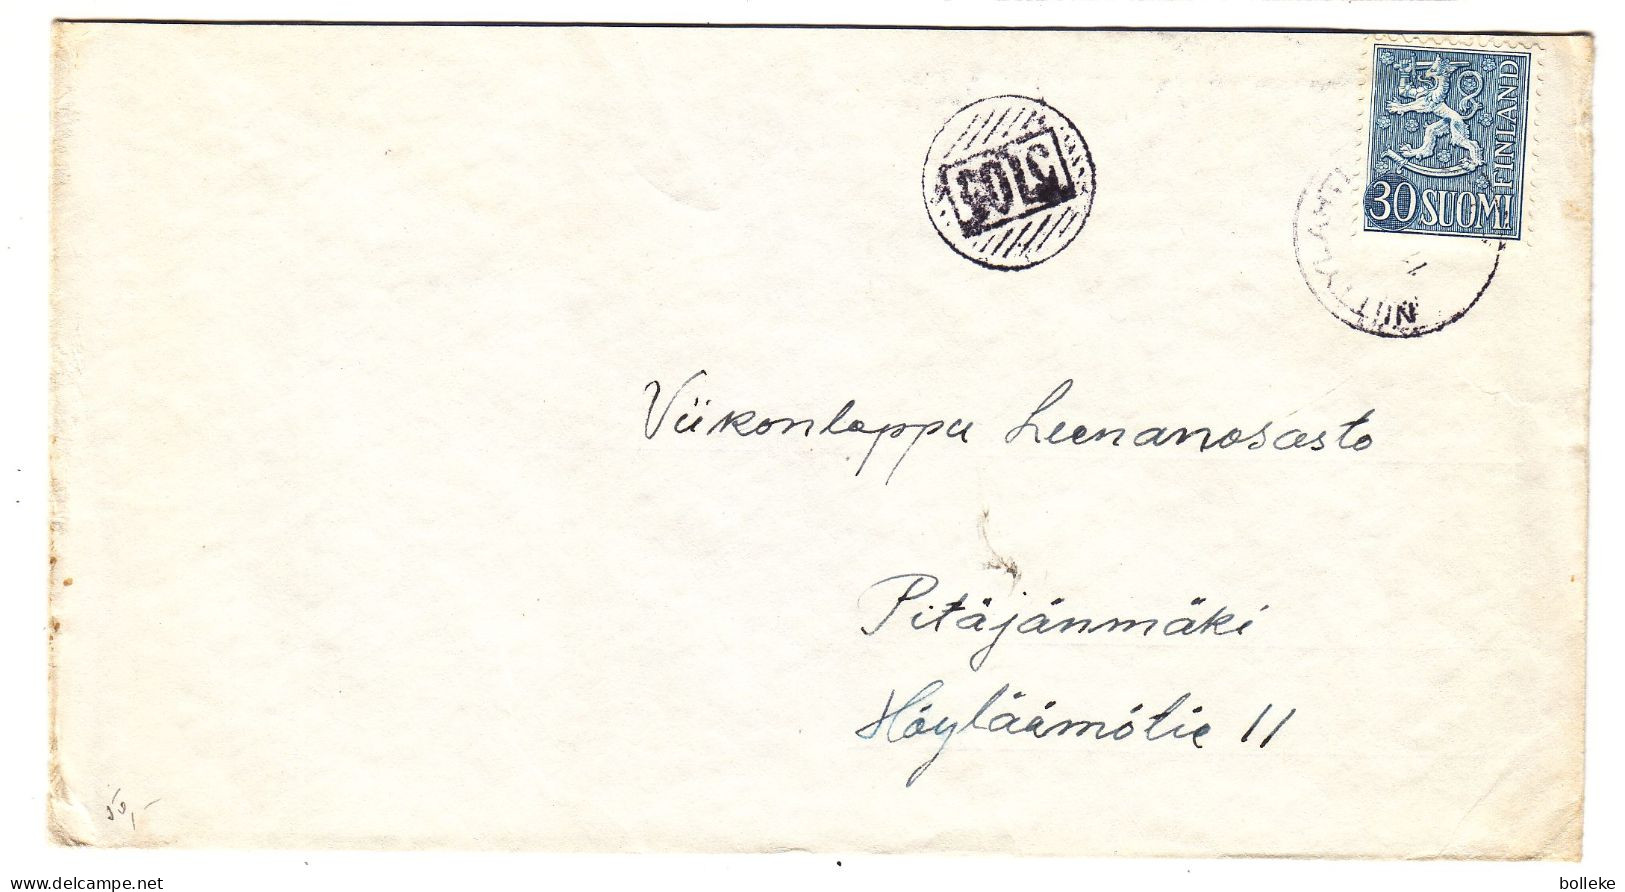 Finlande - Lettre De 1955 - Oblit Niitylahti - Avec Cachet Rural - - Brieven En Documenten